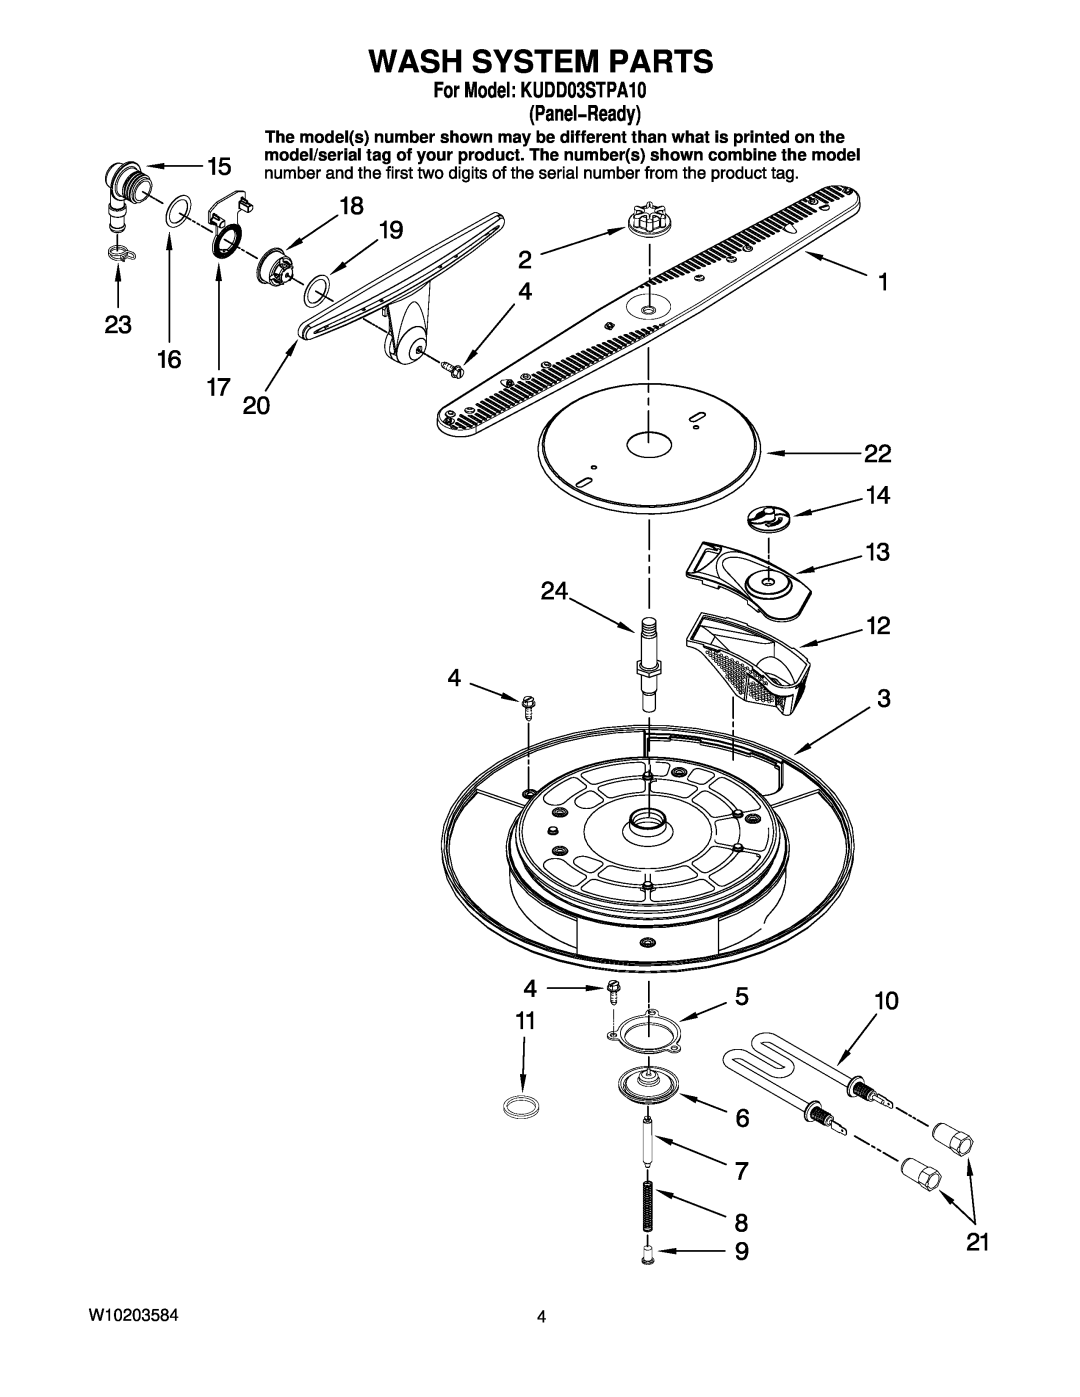 KitchenAid manual Wash System Parts, W10203584, For Model KUDD03STPA10 Panel−Ready 